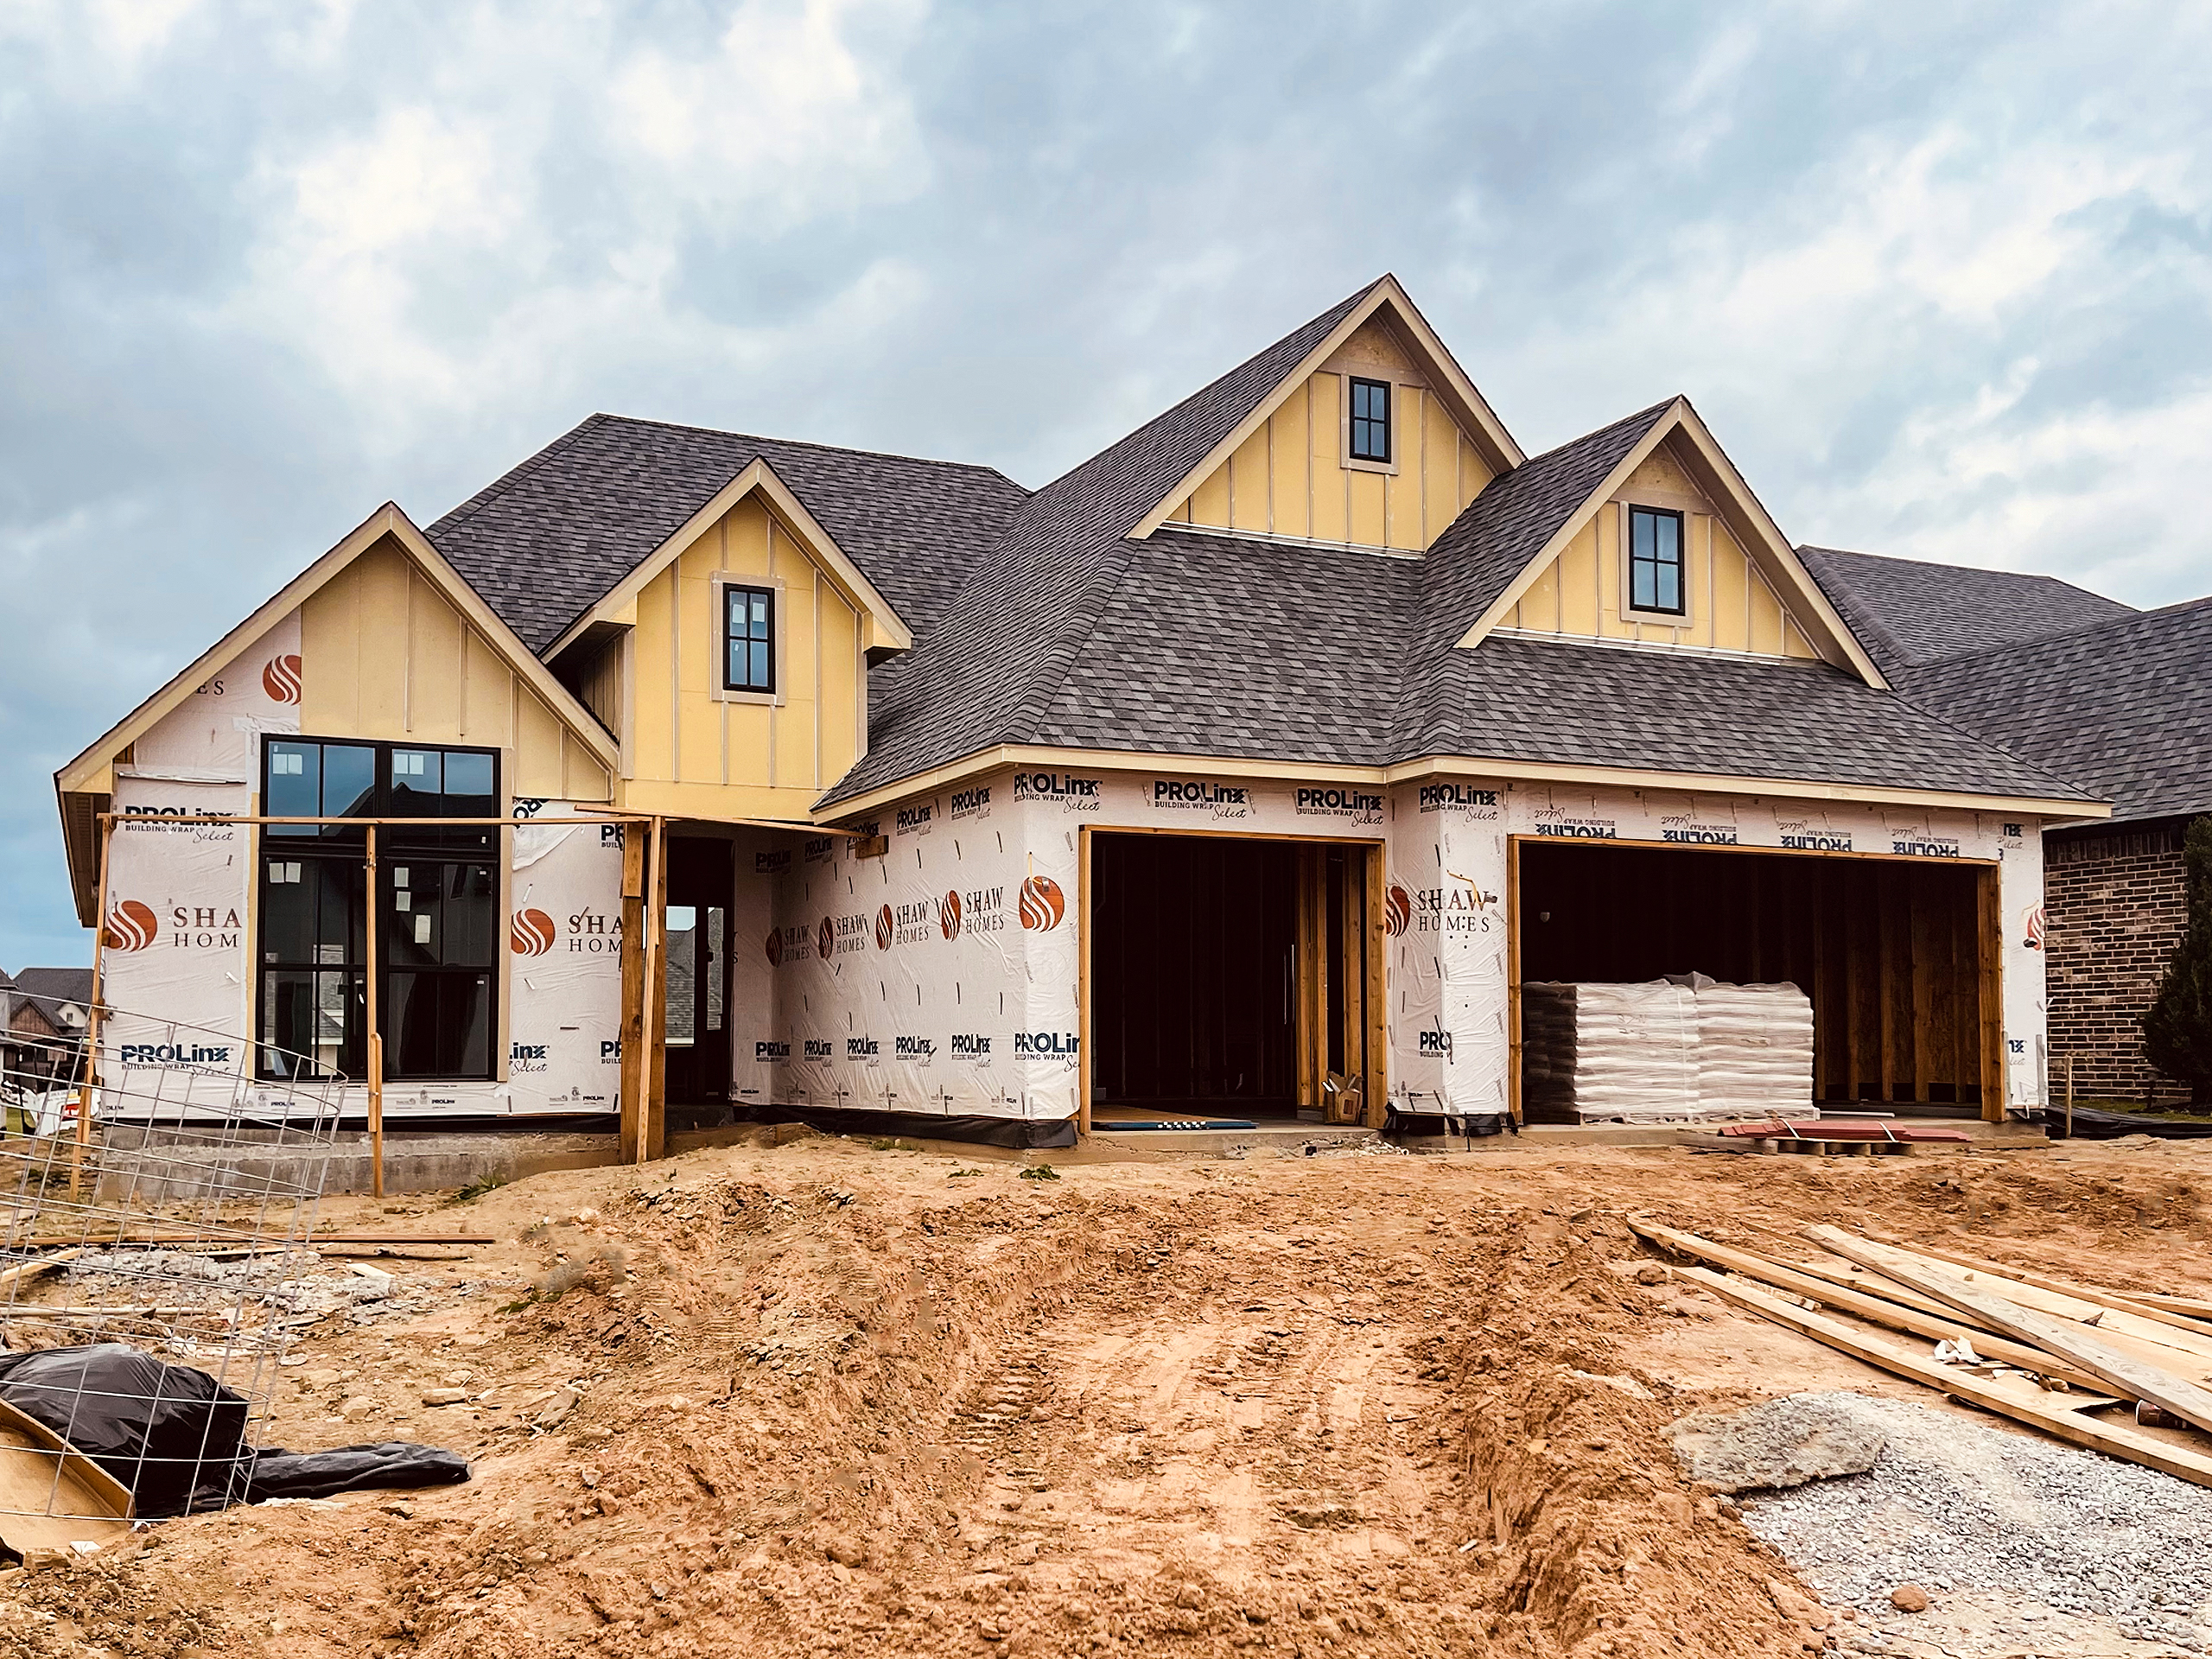 13020 S. 5th Pl. Ventana Q B Yorktown Birmingham. New Home Builder, Jenks, Oklahoma. Shaw Homes Move In Ready Home (1)